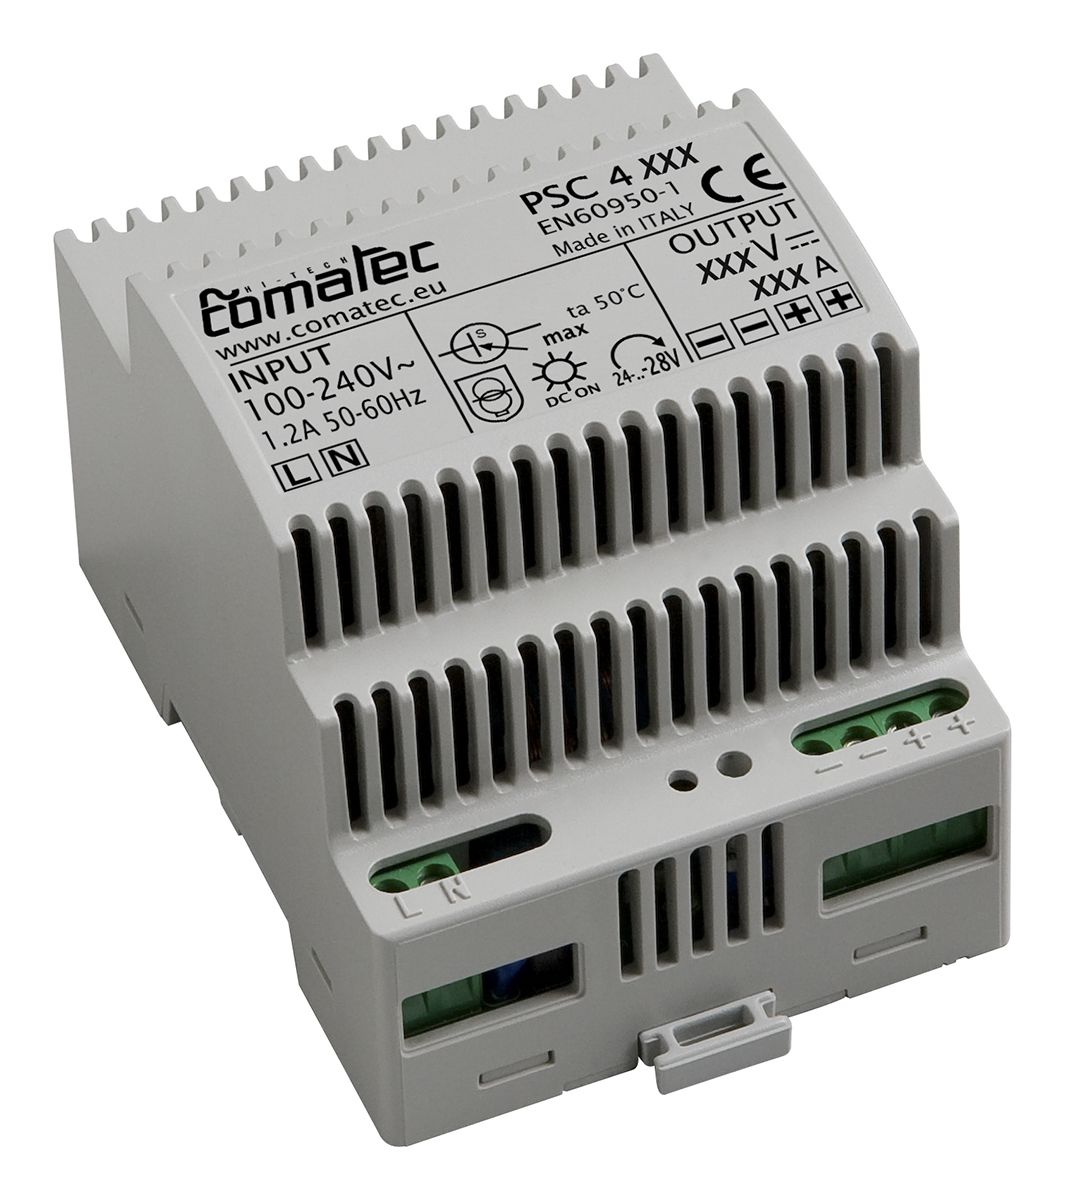 Comatec PSC DIN Rail Power Supply 230V ac Input, 24V dc Output, 2.5A 60W